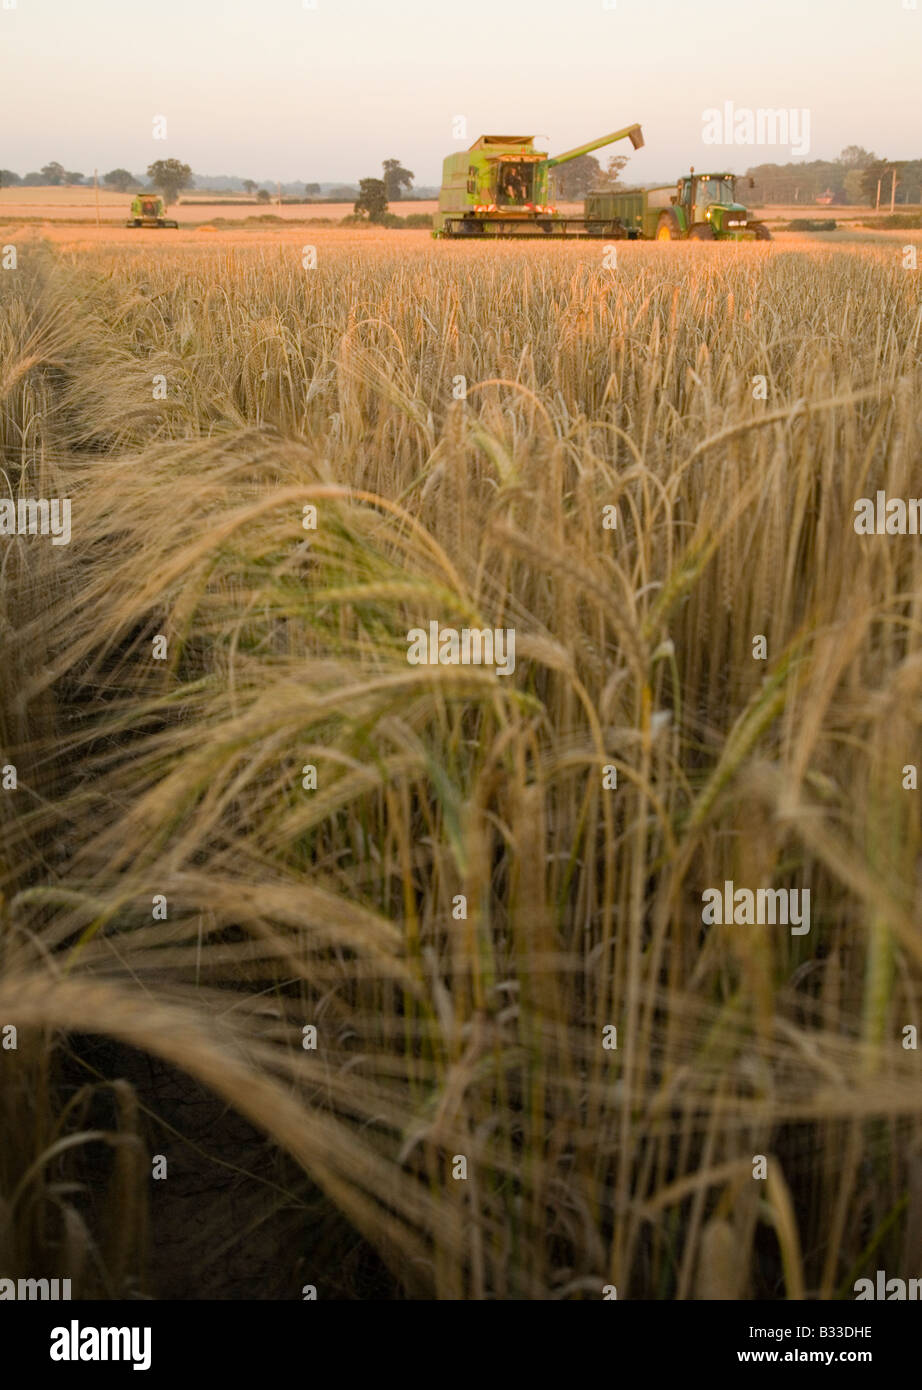 Harvesting a field of Barley Stock Photo